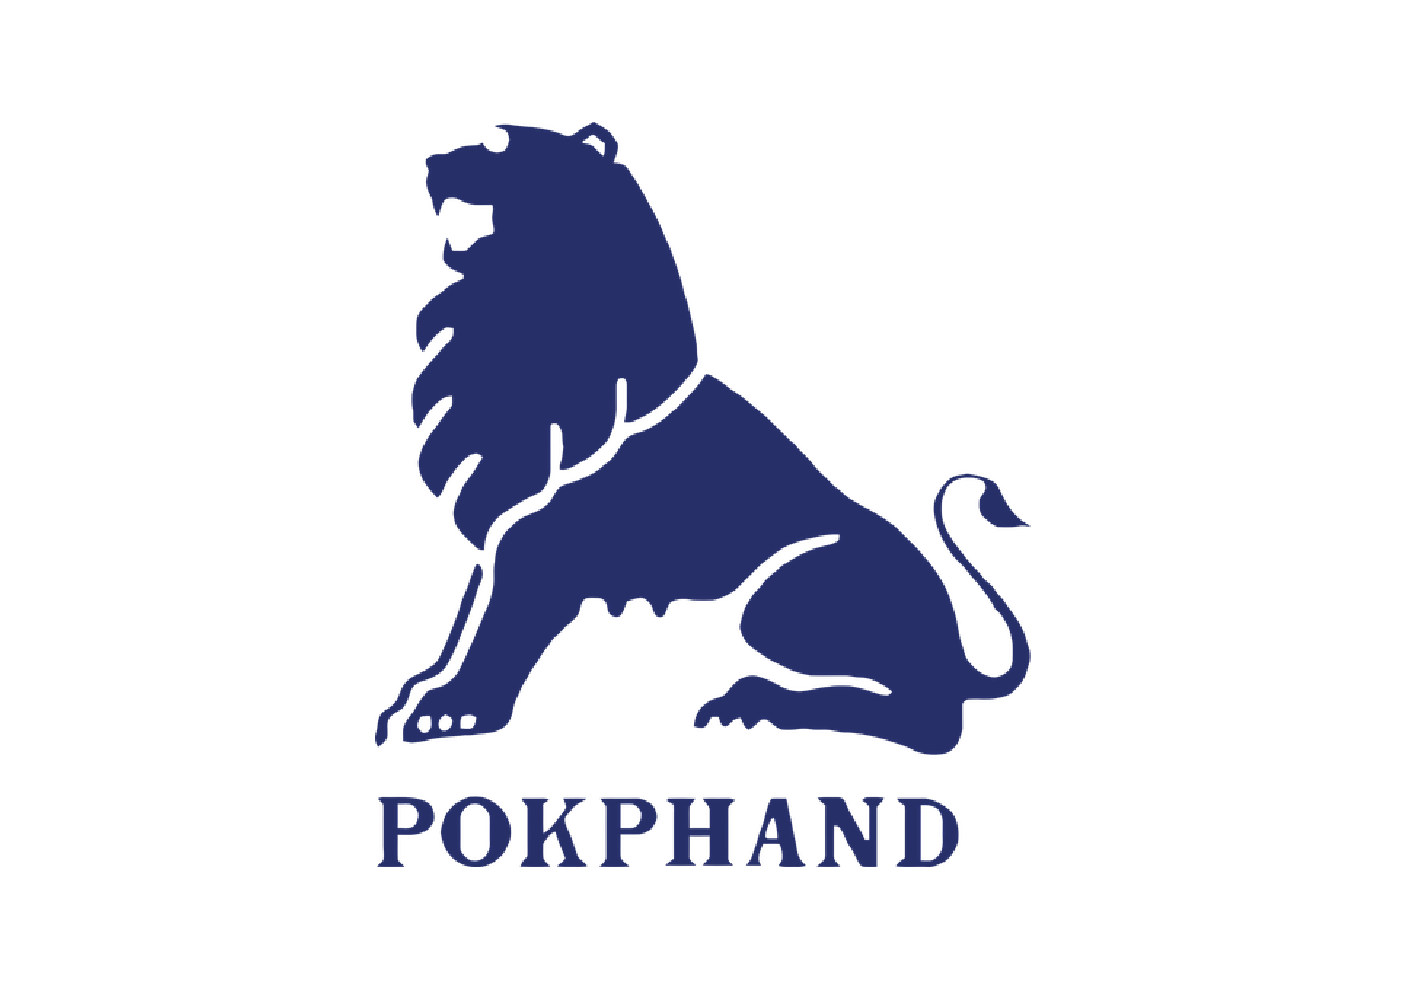 Pokphand